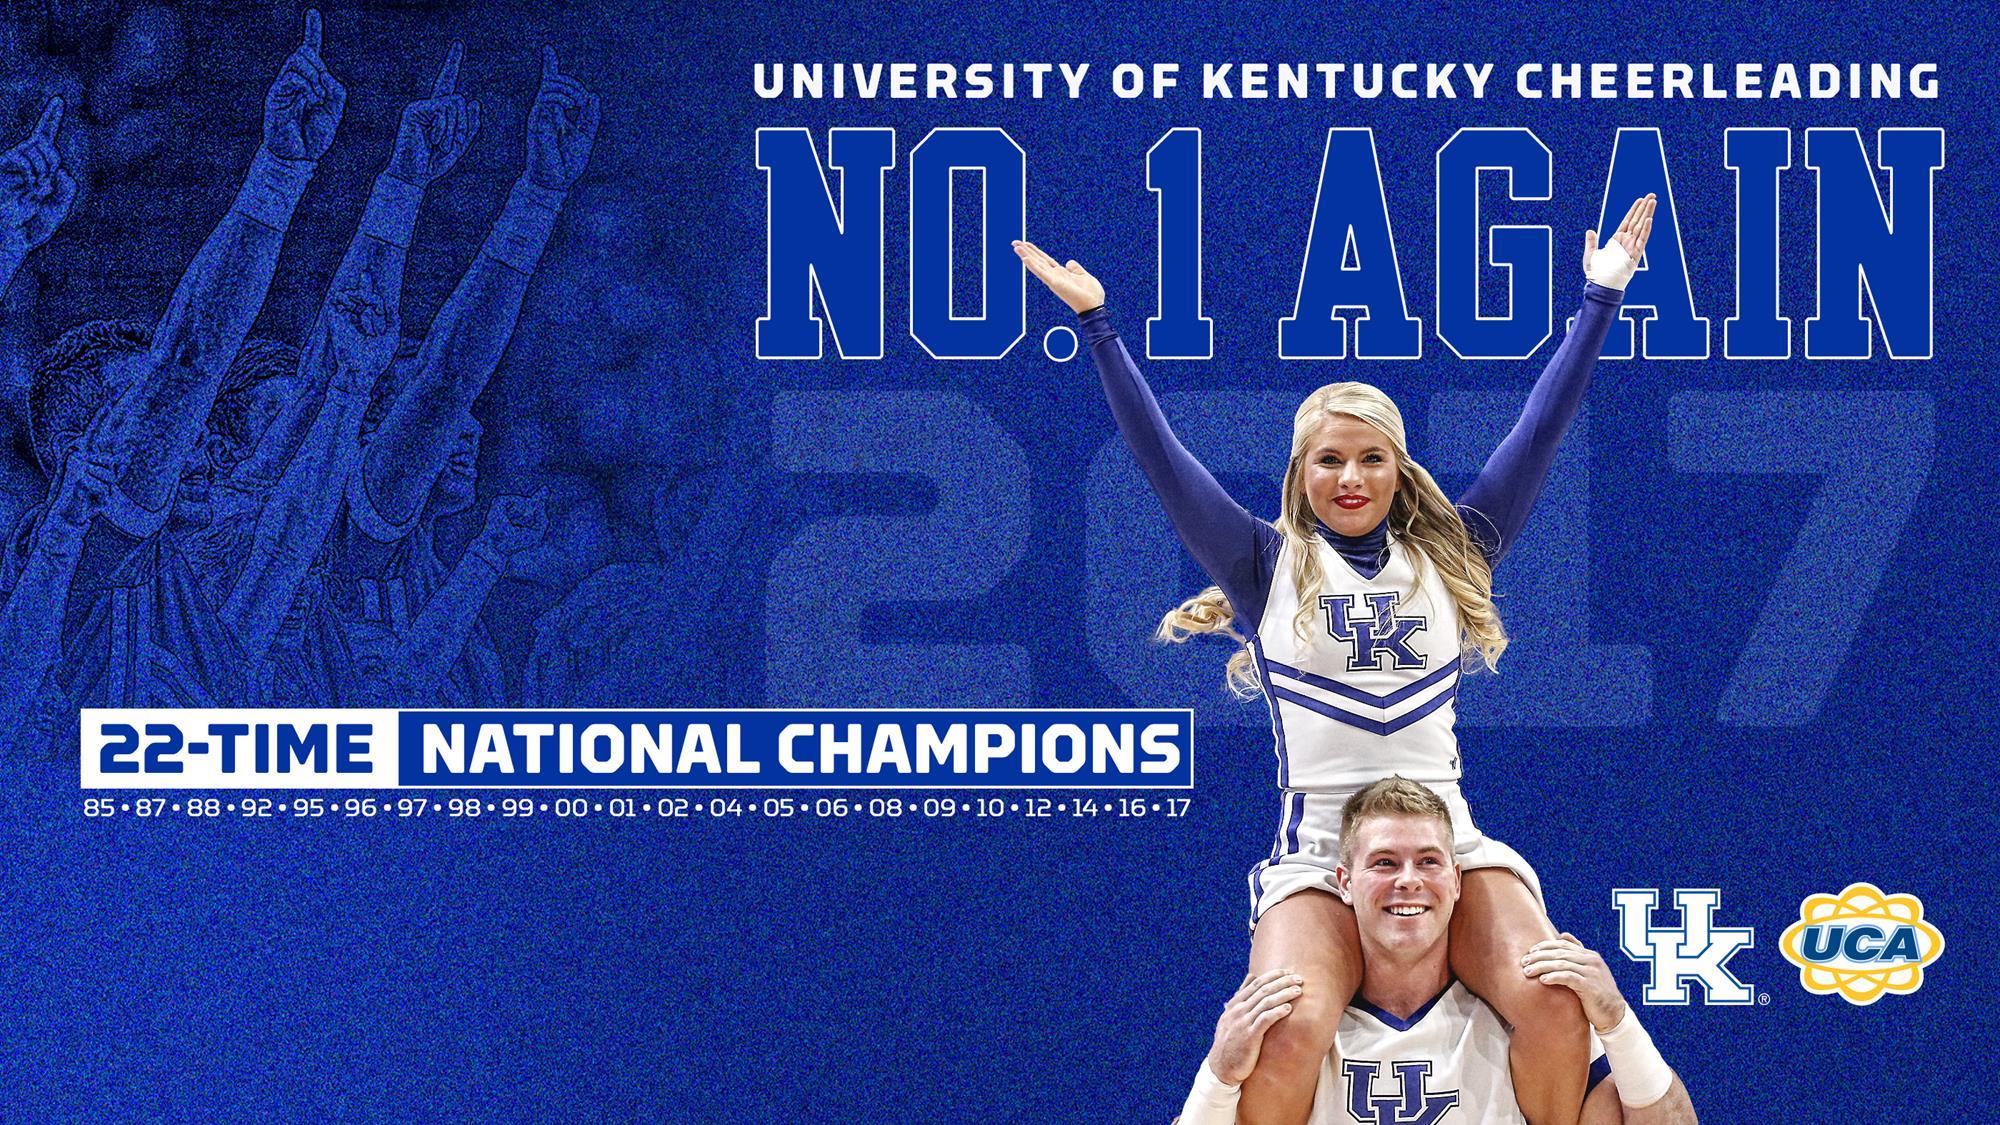 Kentucky Cheerleaders Win 22nd National Championship